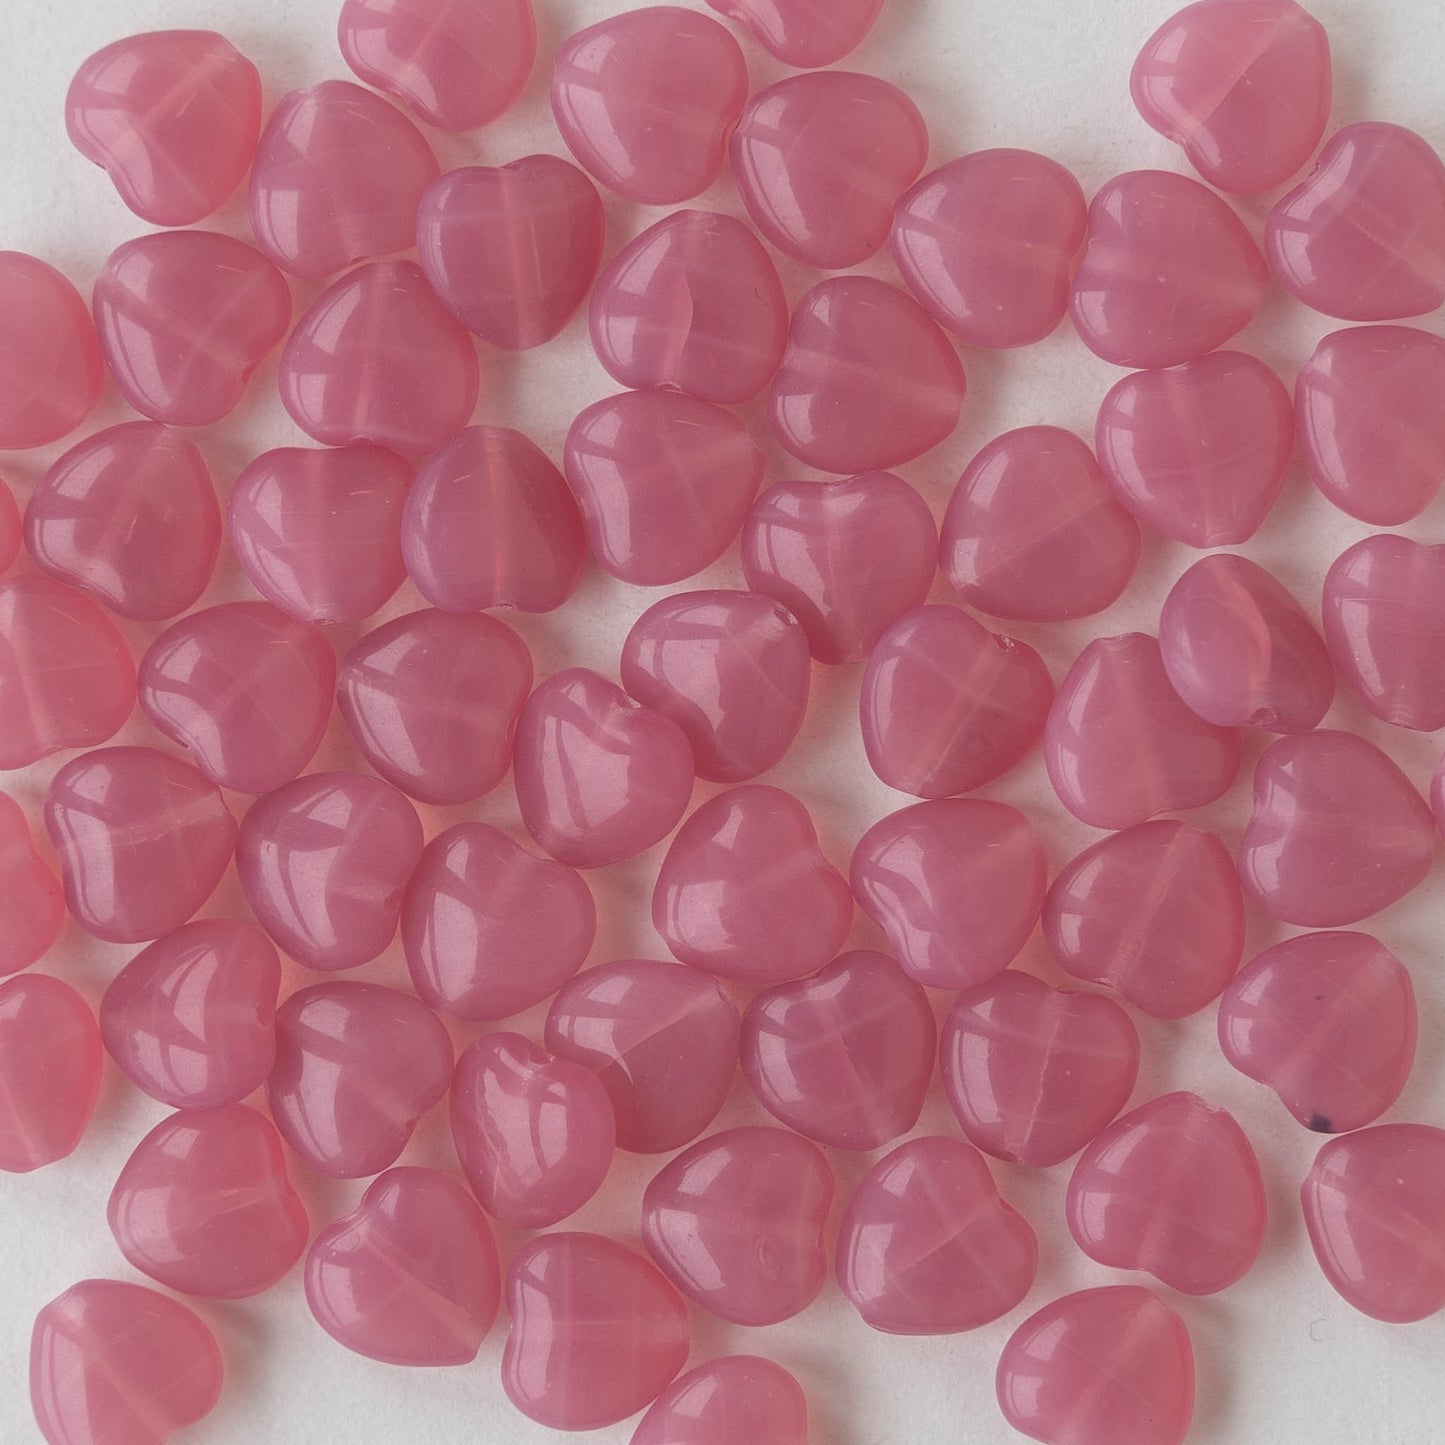 8mm Heart Beads - Pink Opaline - 20 hearts